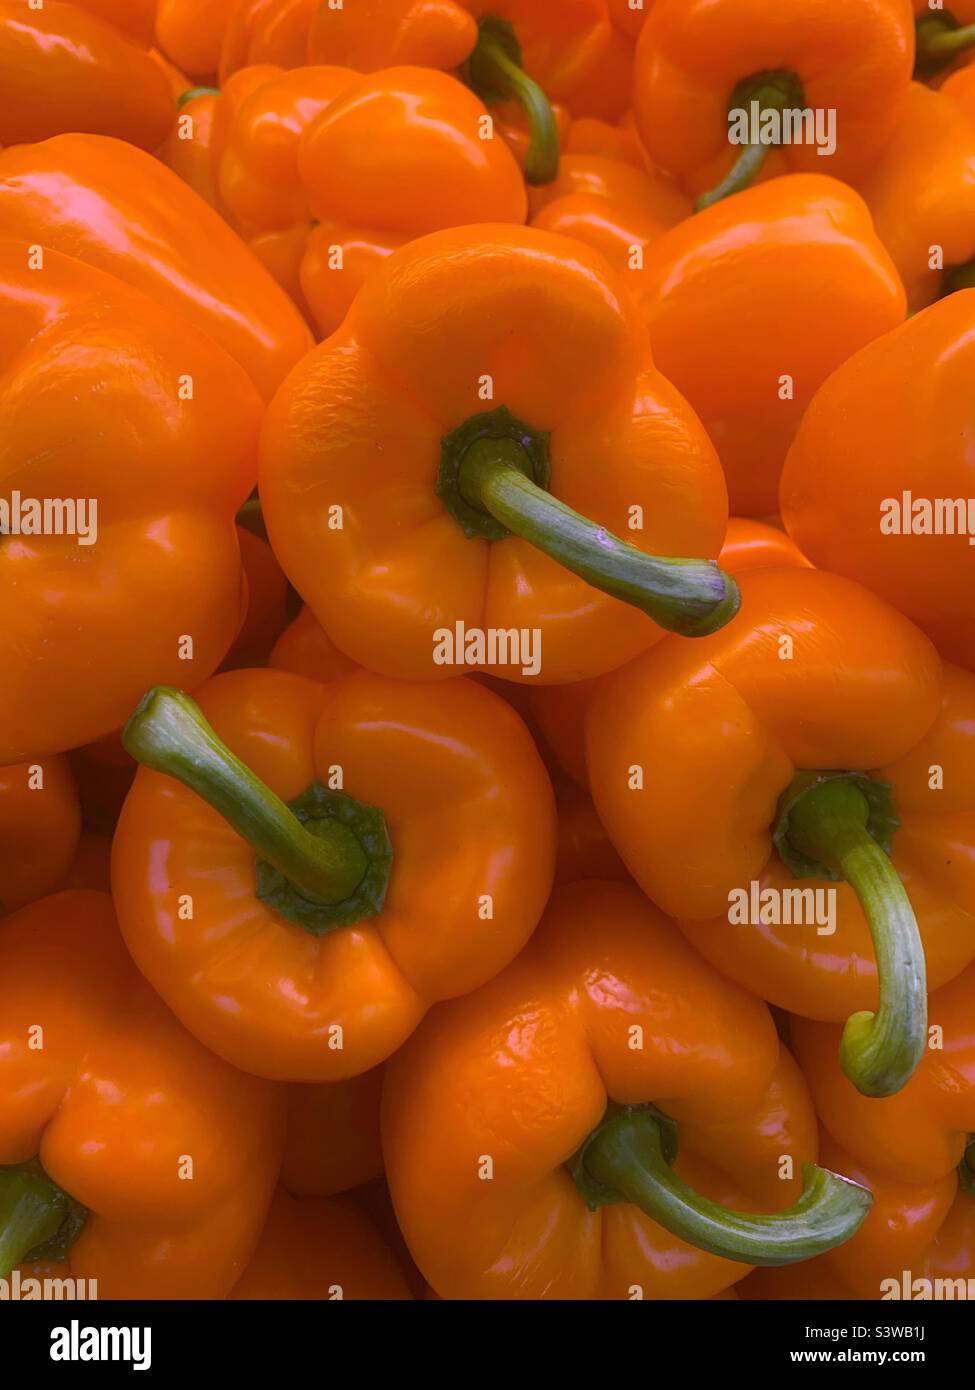 Garden fresh orange peppers in season. Stock Photo